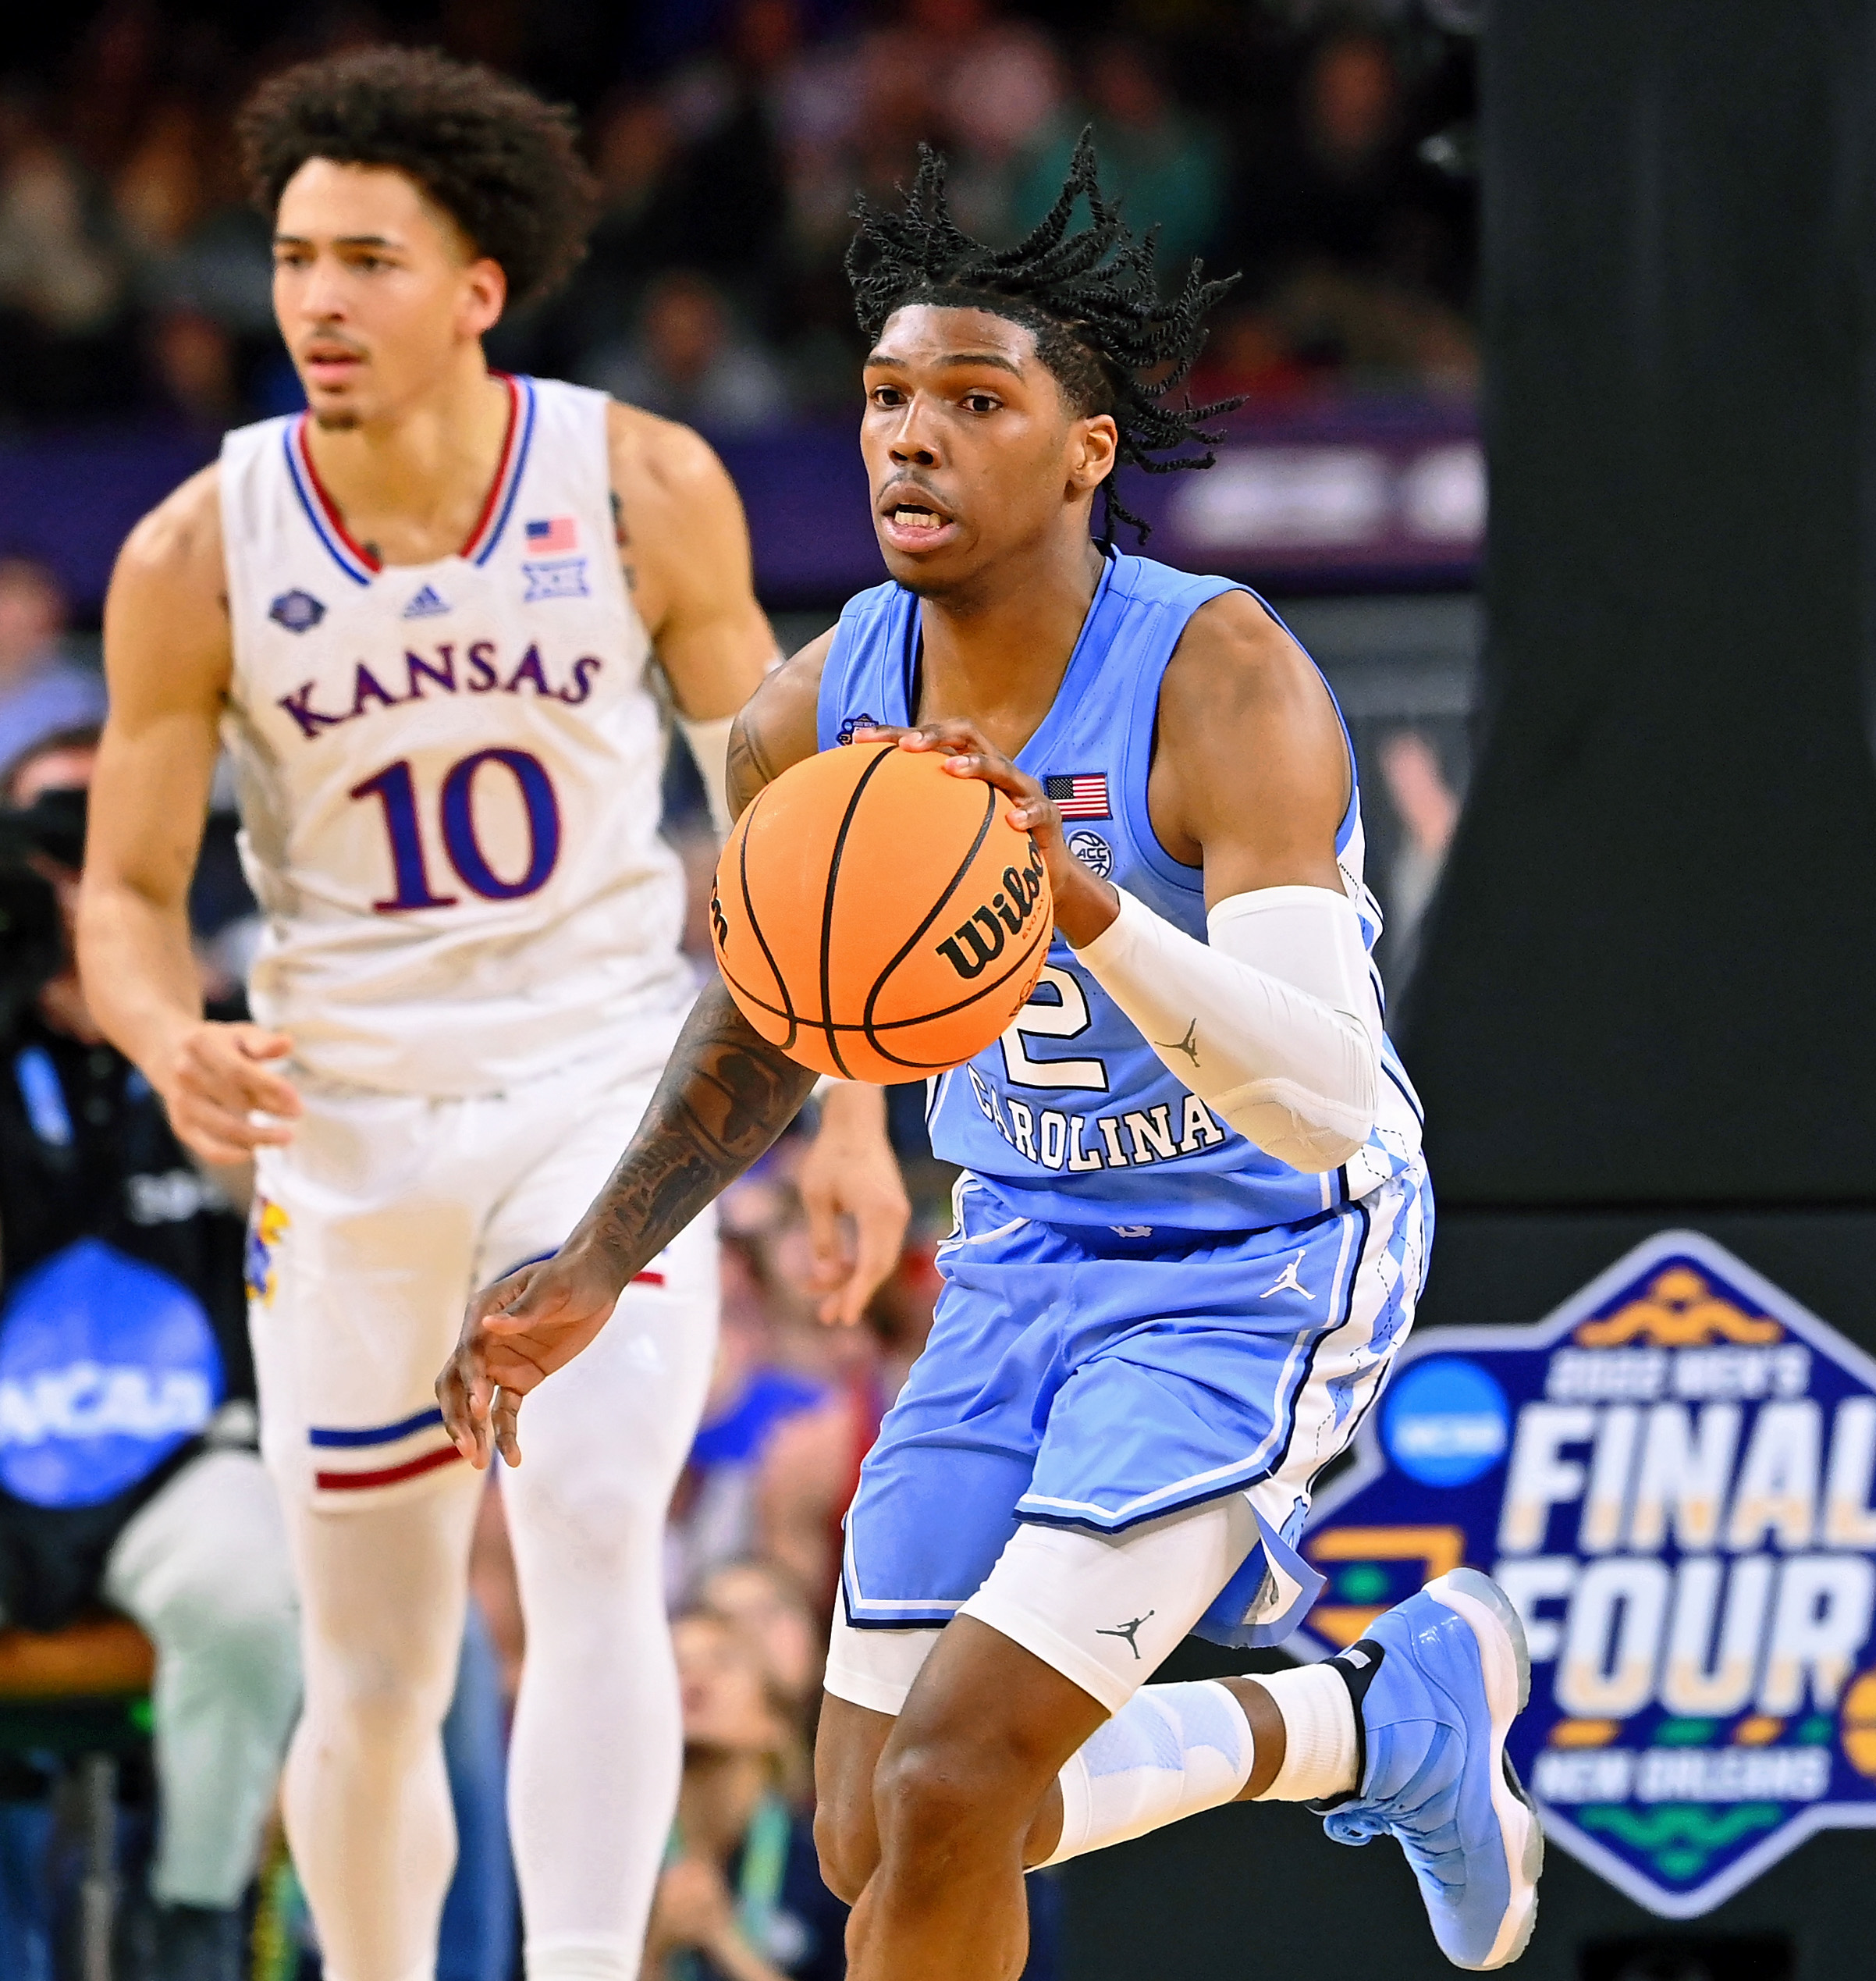 NCAA Basketball: Final Four-National Championship-Kansas vs North Carolina